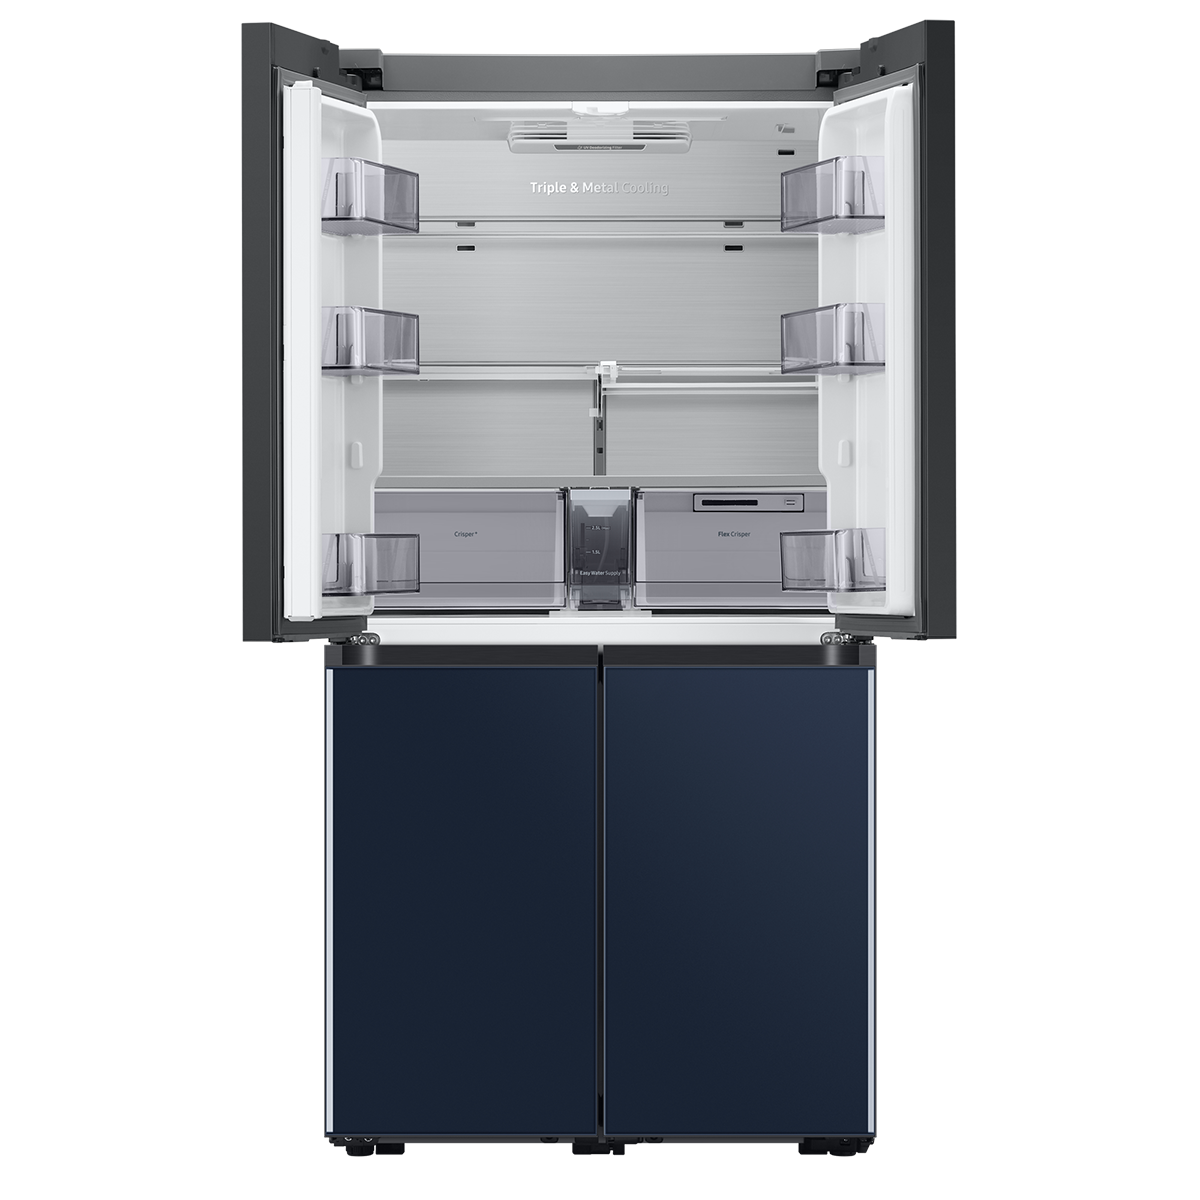 Tủ lạnh BESPOKE Multidoor Samsung Inverter 599L RF60A91R177/SV (Trắng/Xanh Navy) chỉ giao kv HN